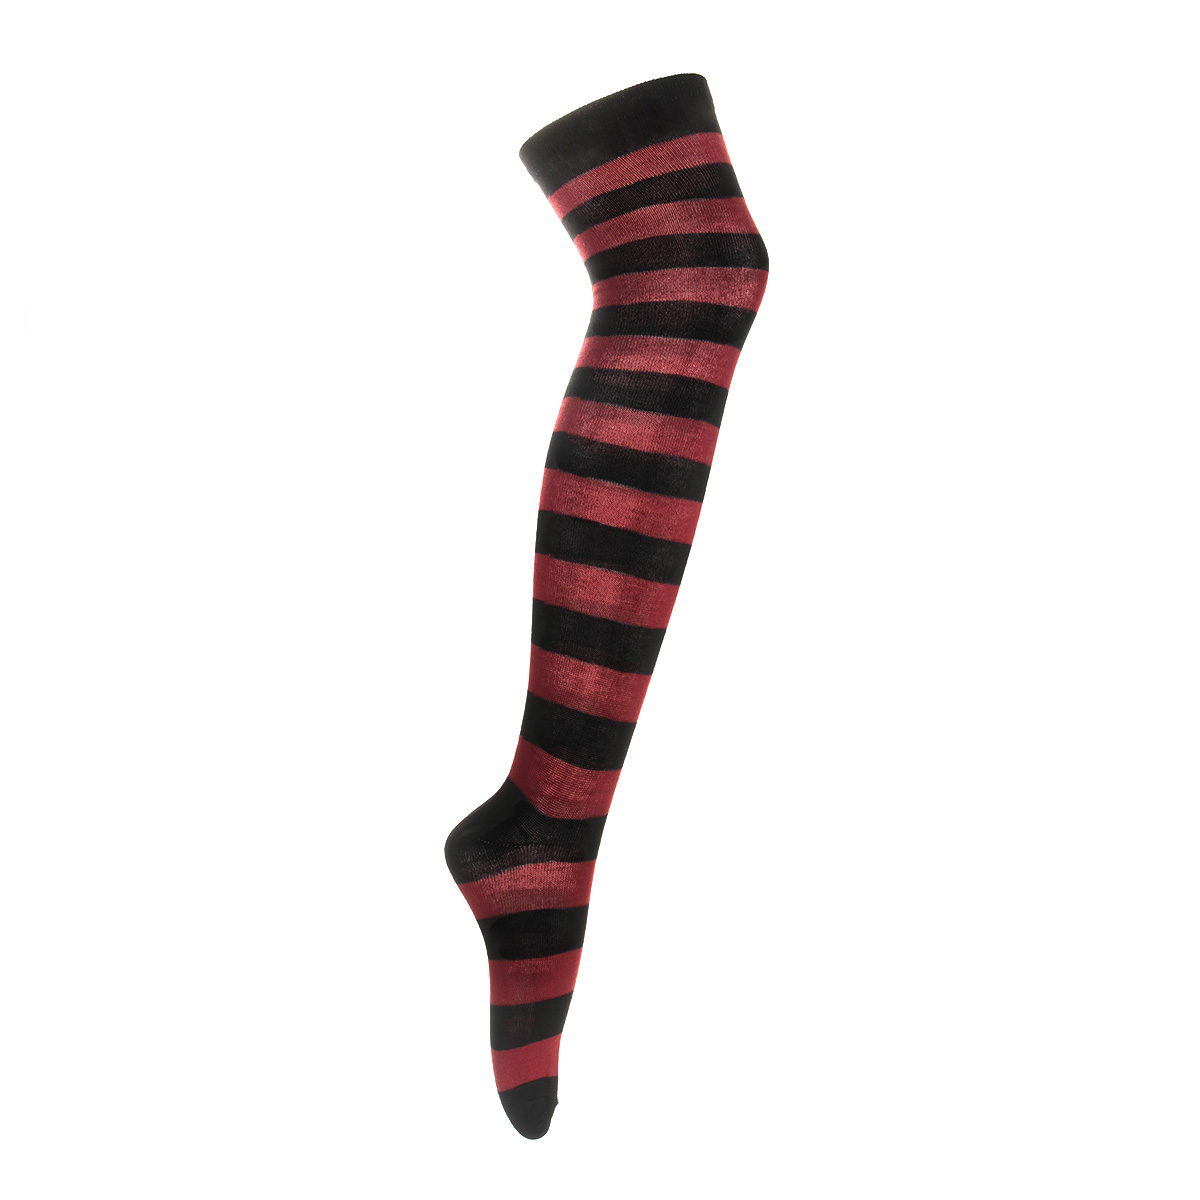 Black and Red Stripe - Over the knee socks - Cybershop Australia